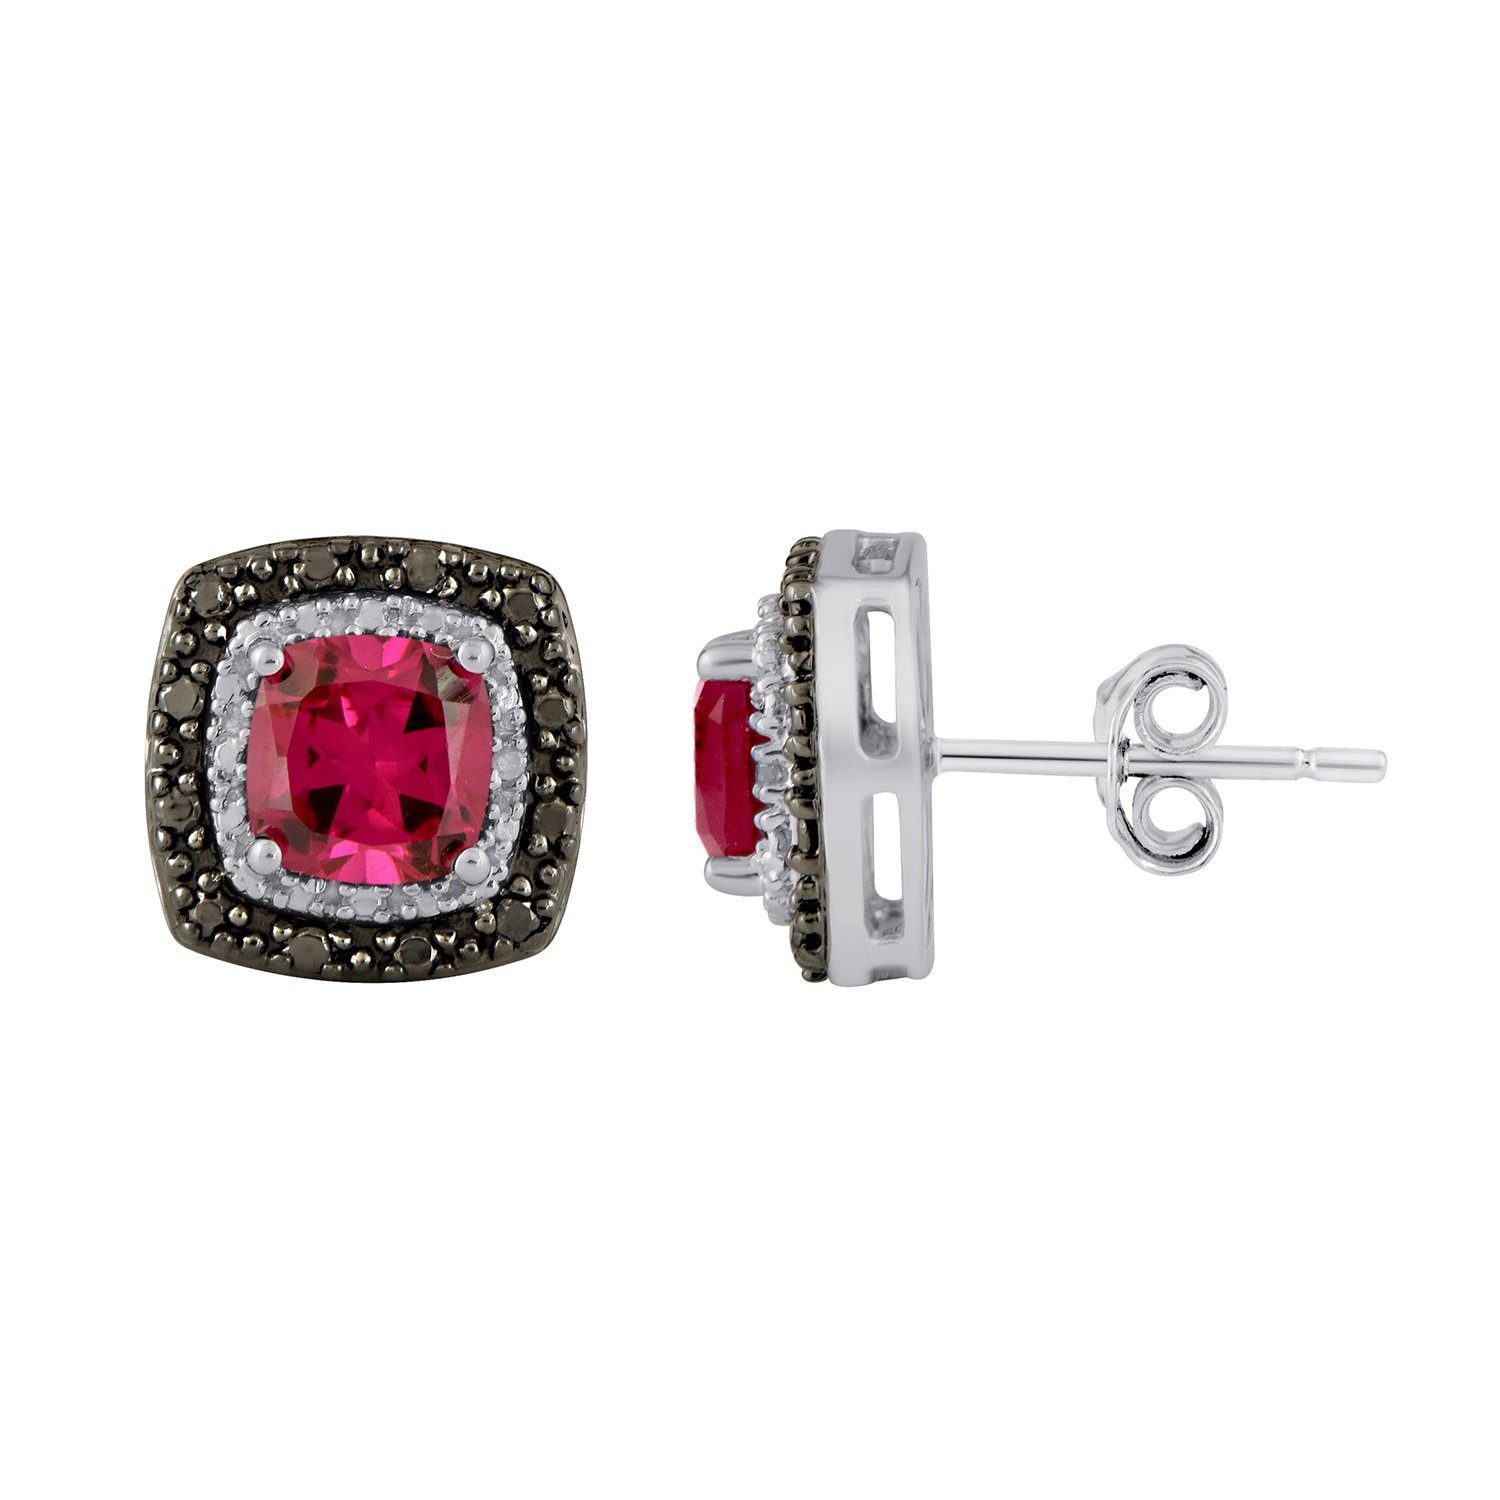 Mirage Created Ruby and Black Diamond Set Stud Earrings in Sterling Silver Earrings Bevilles 